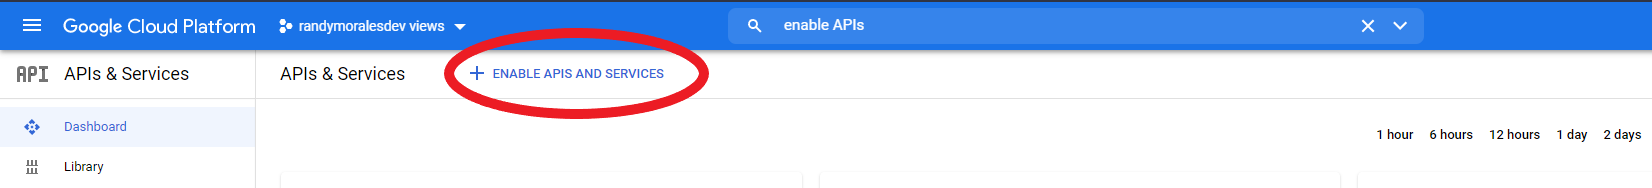 Dashboard Enable APIs